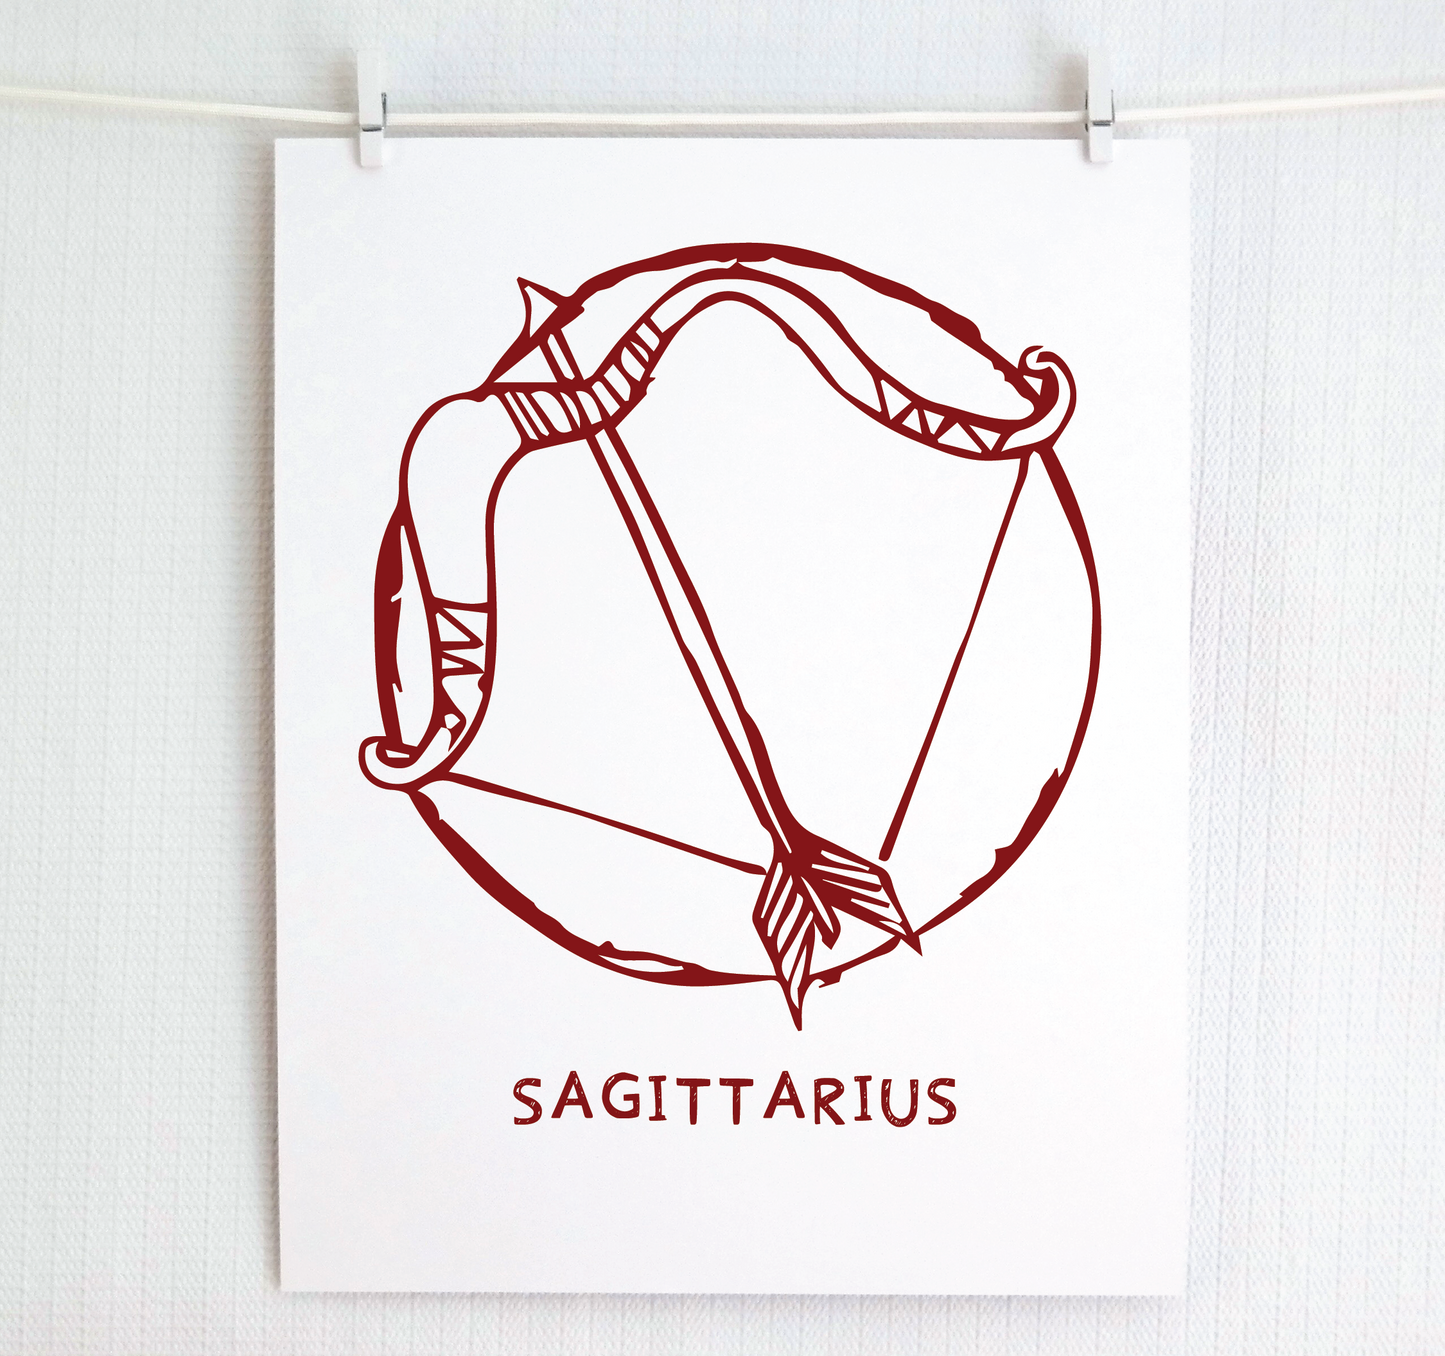 Signs of the Zodiac: SAGITTARIUS